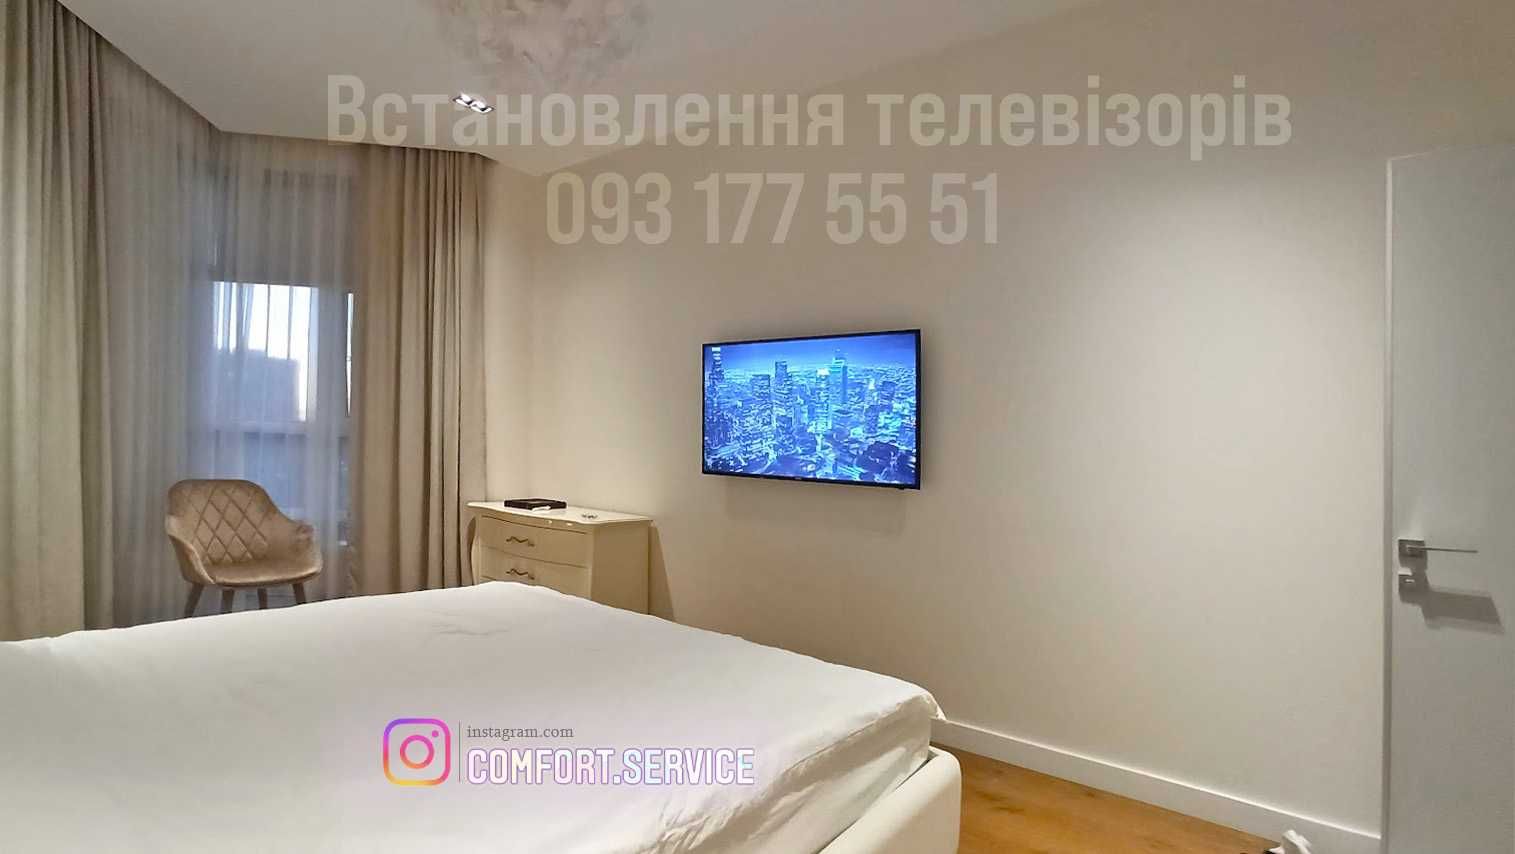 Монтаж / Установка телевизора на стену Киев,Повесить ТВ на стену.